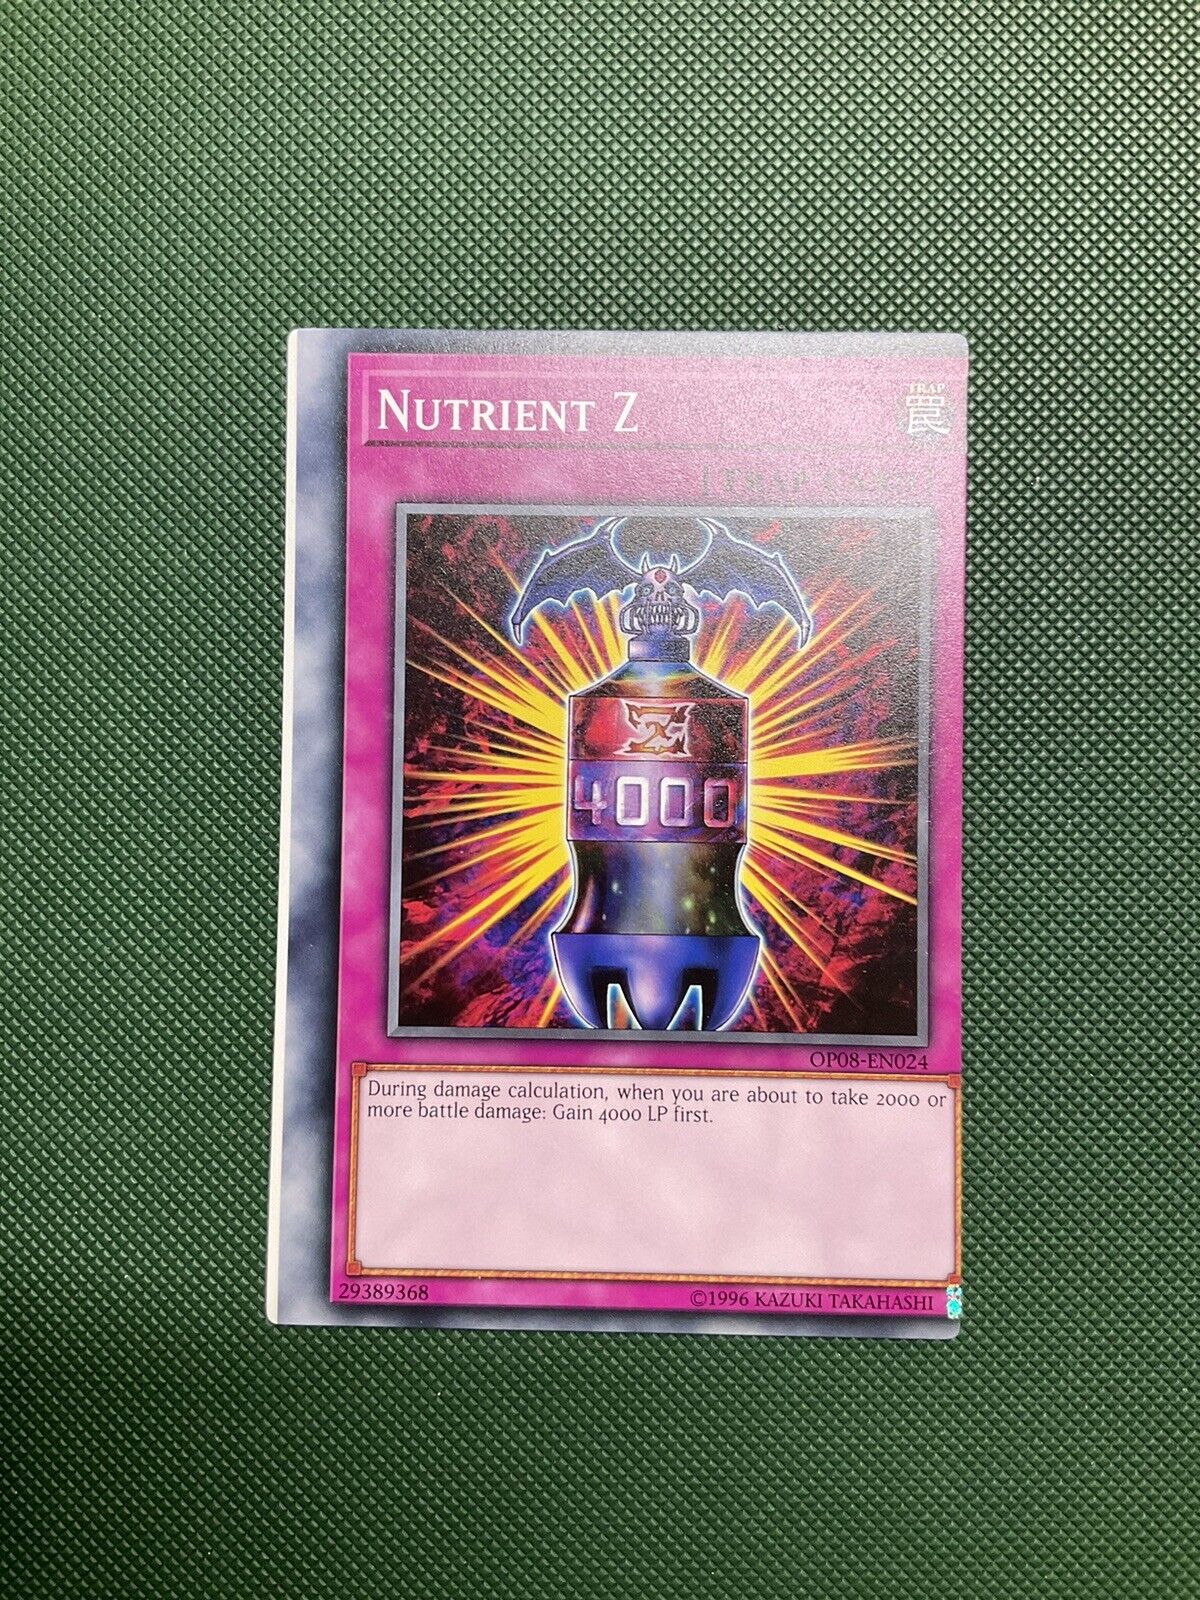 Nutrient Z - OP08-EN024 - NM - YuGiOh ERROR MISCUT MISPRINT Card